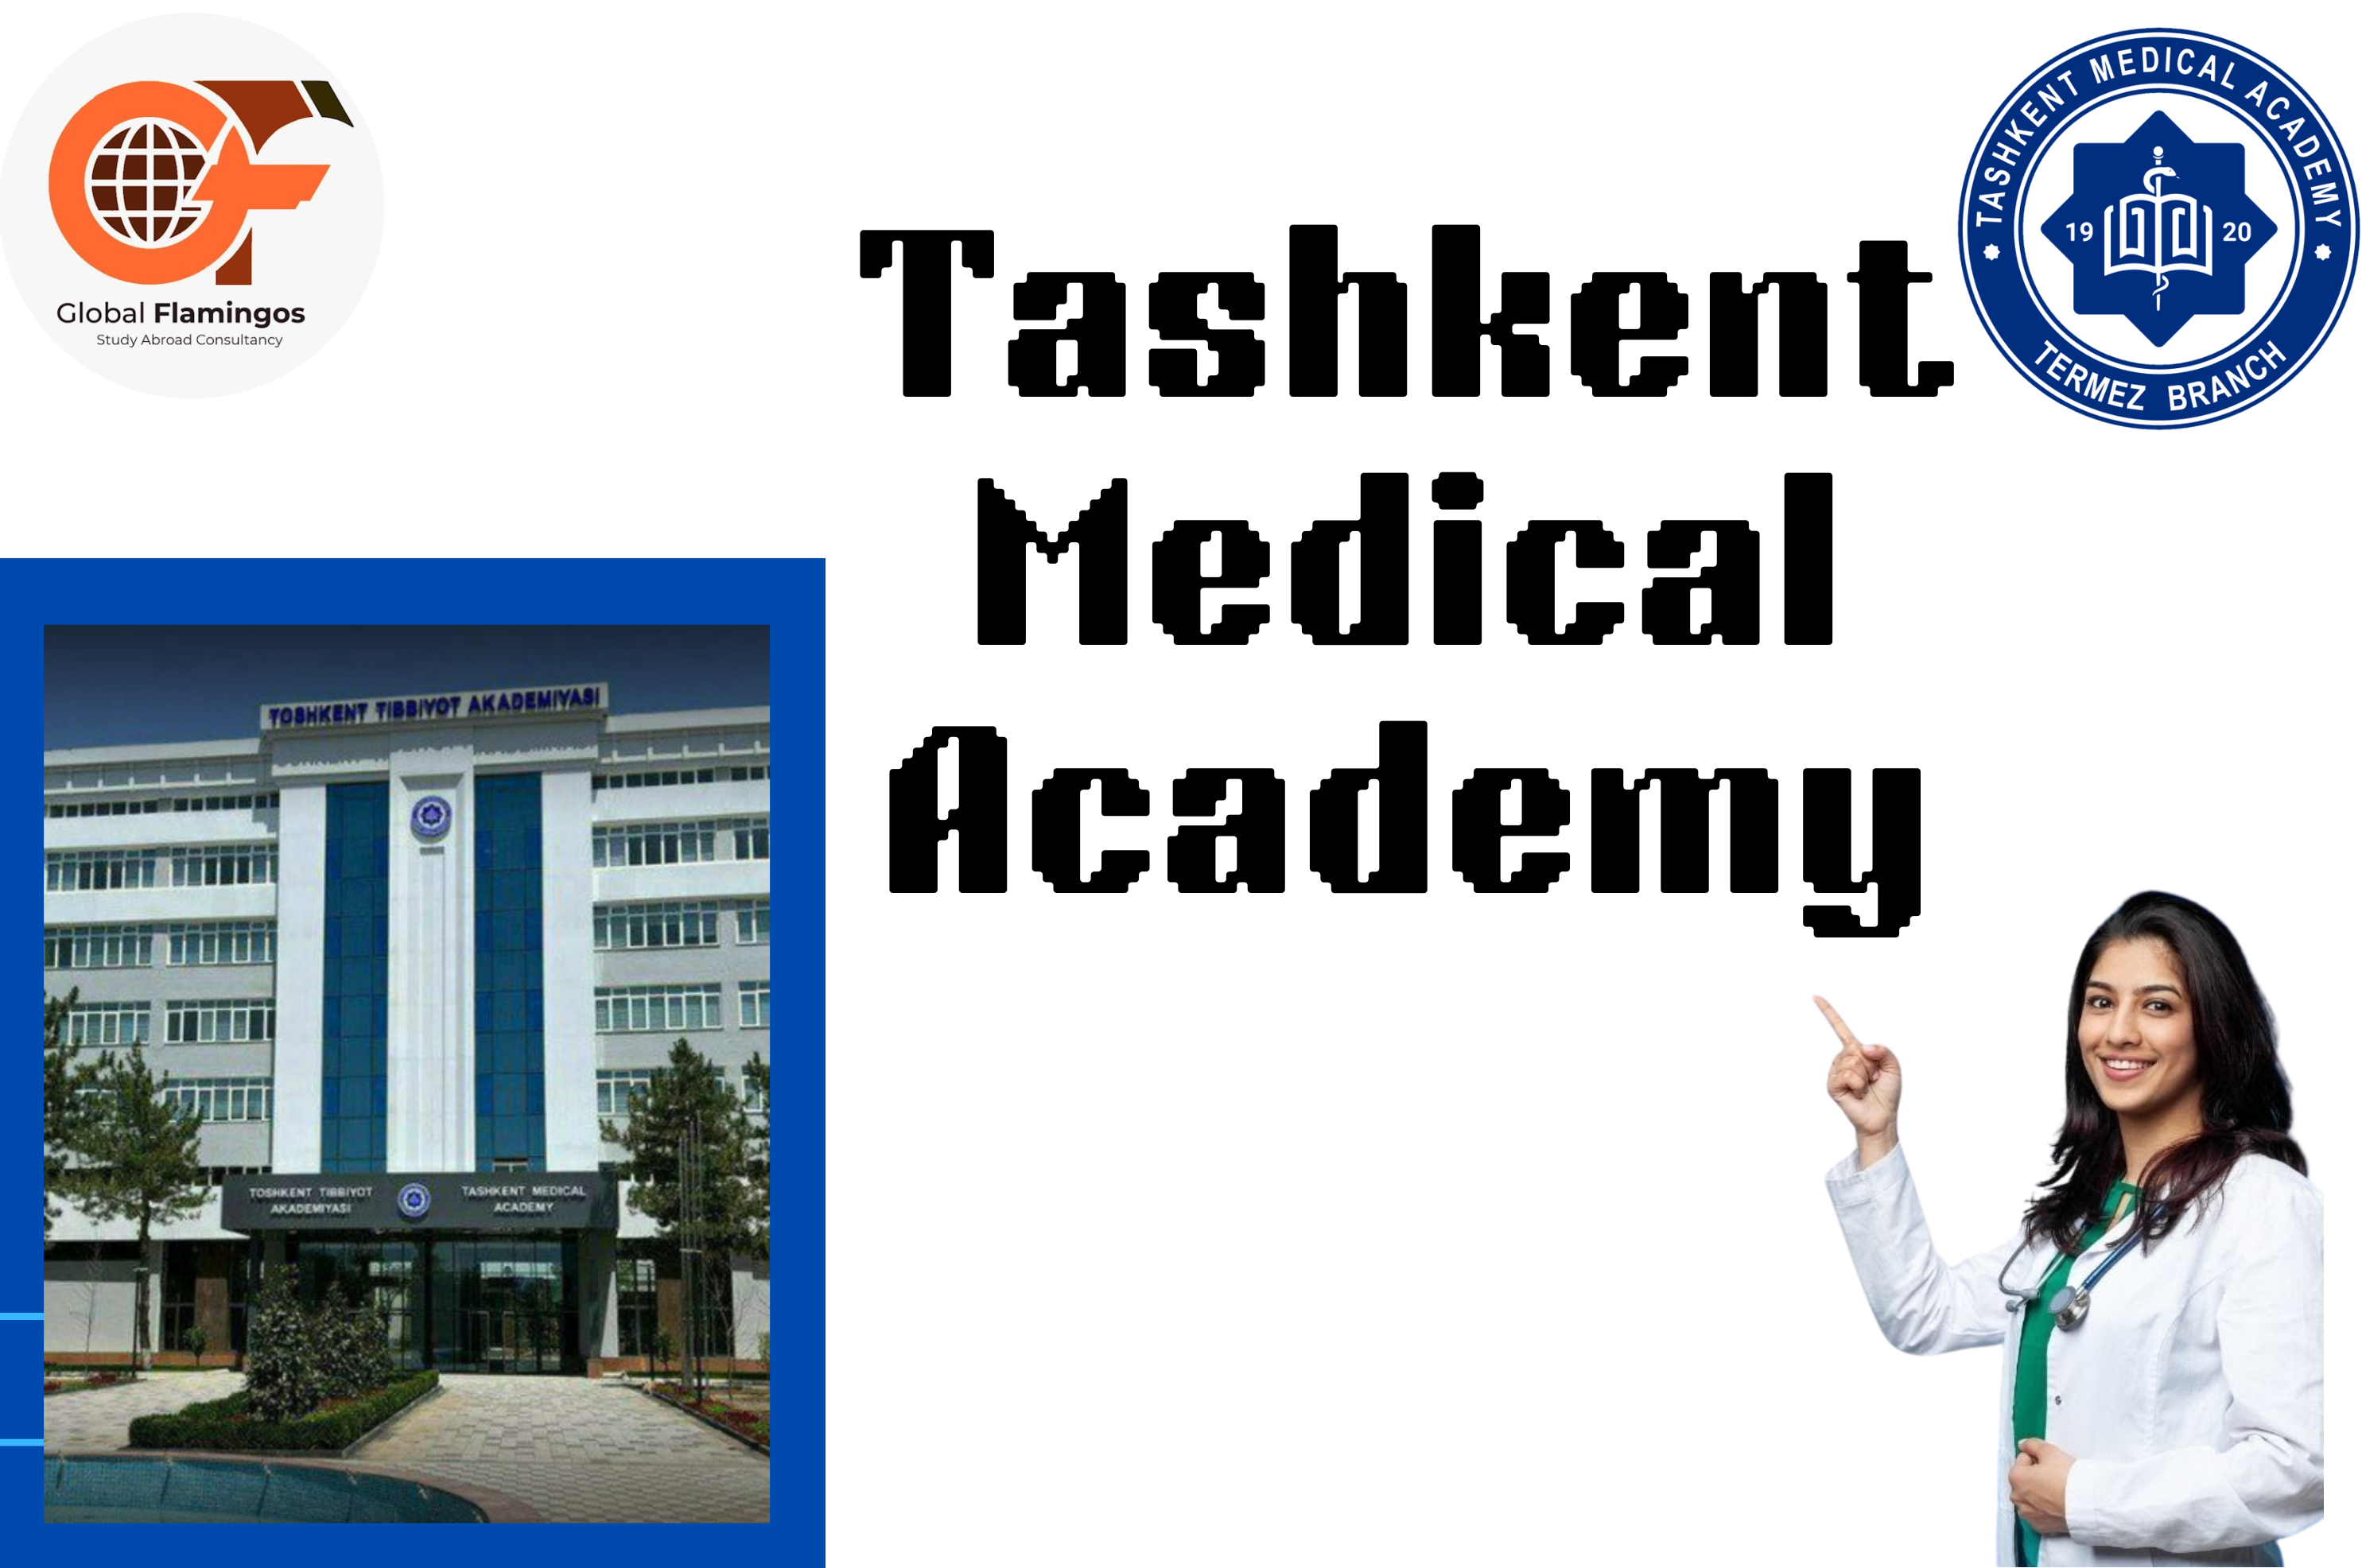 Tashkent Medical Academy